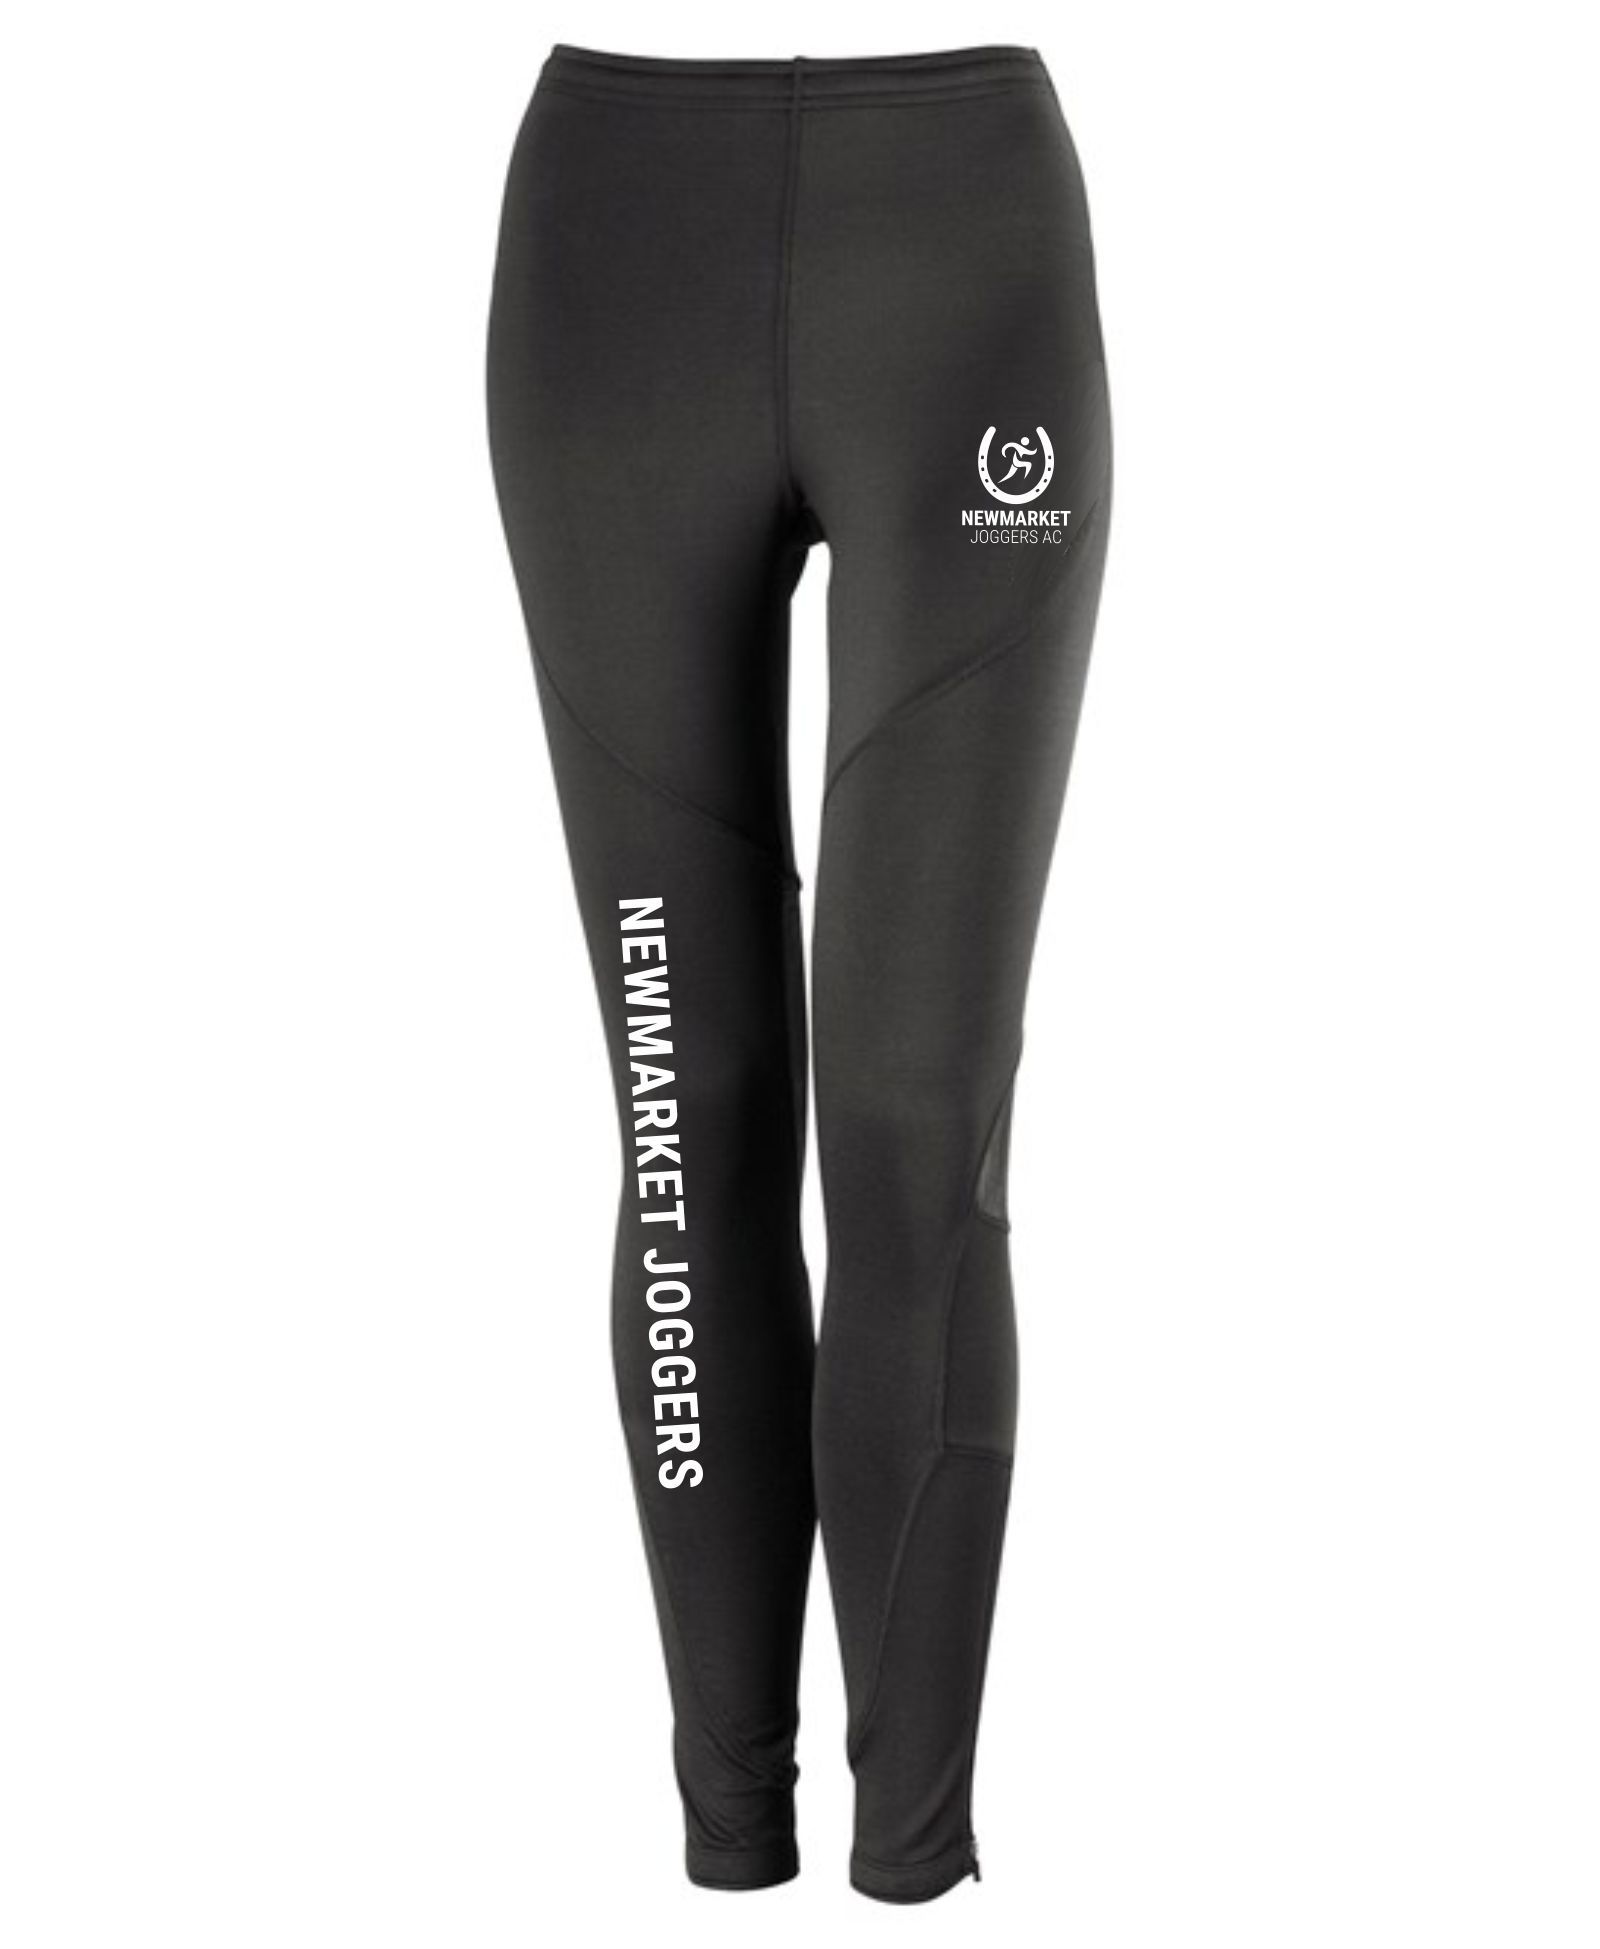 Newmarket Joggers – Sprint pants (Ladies)